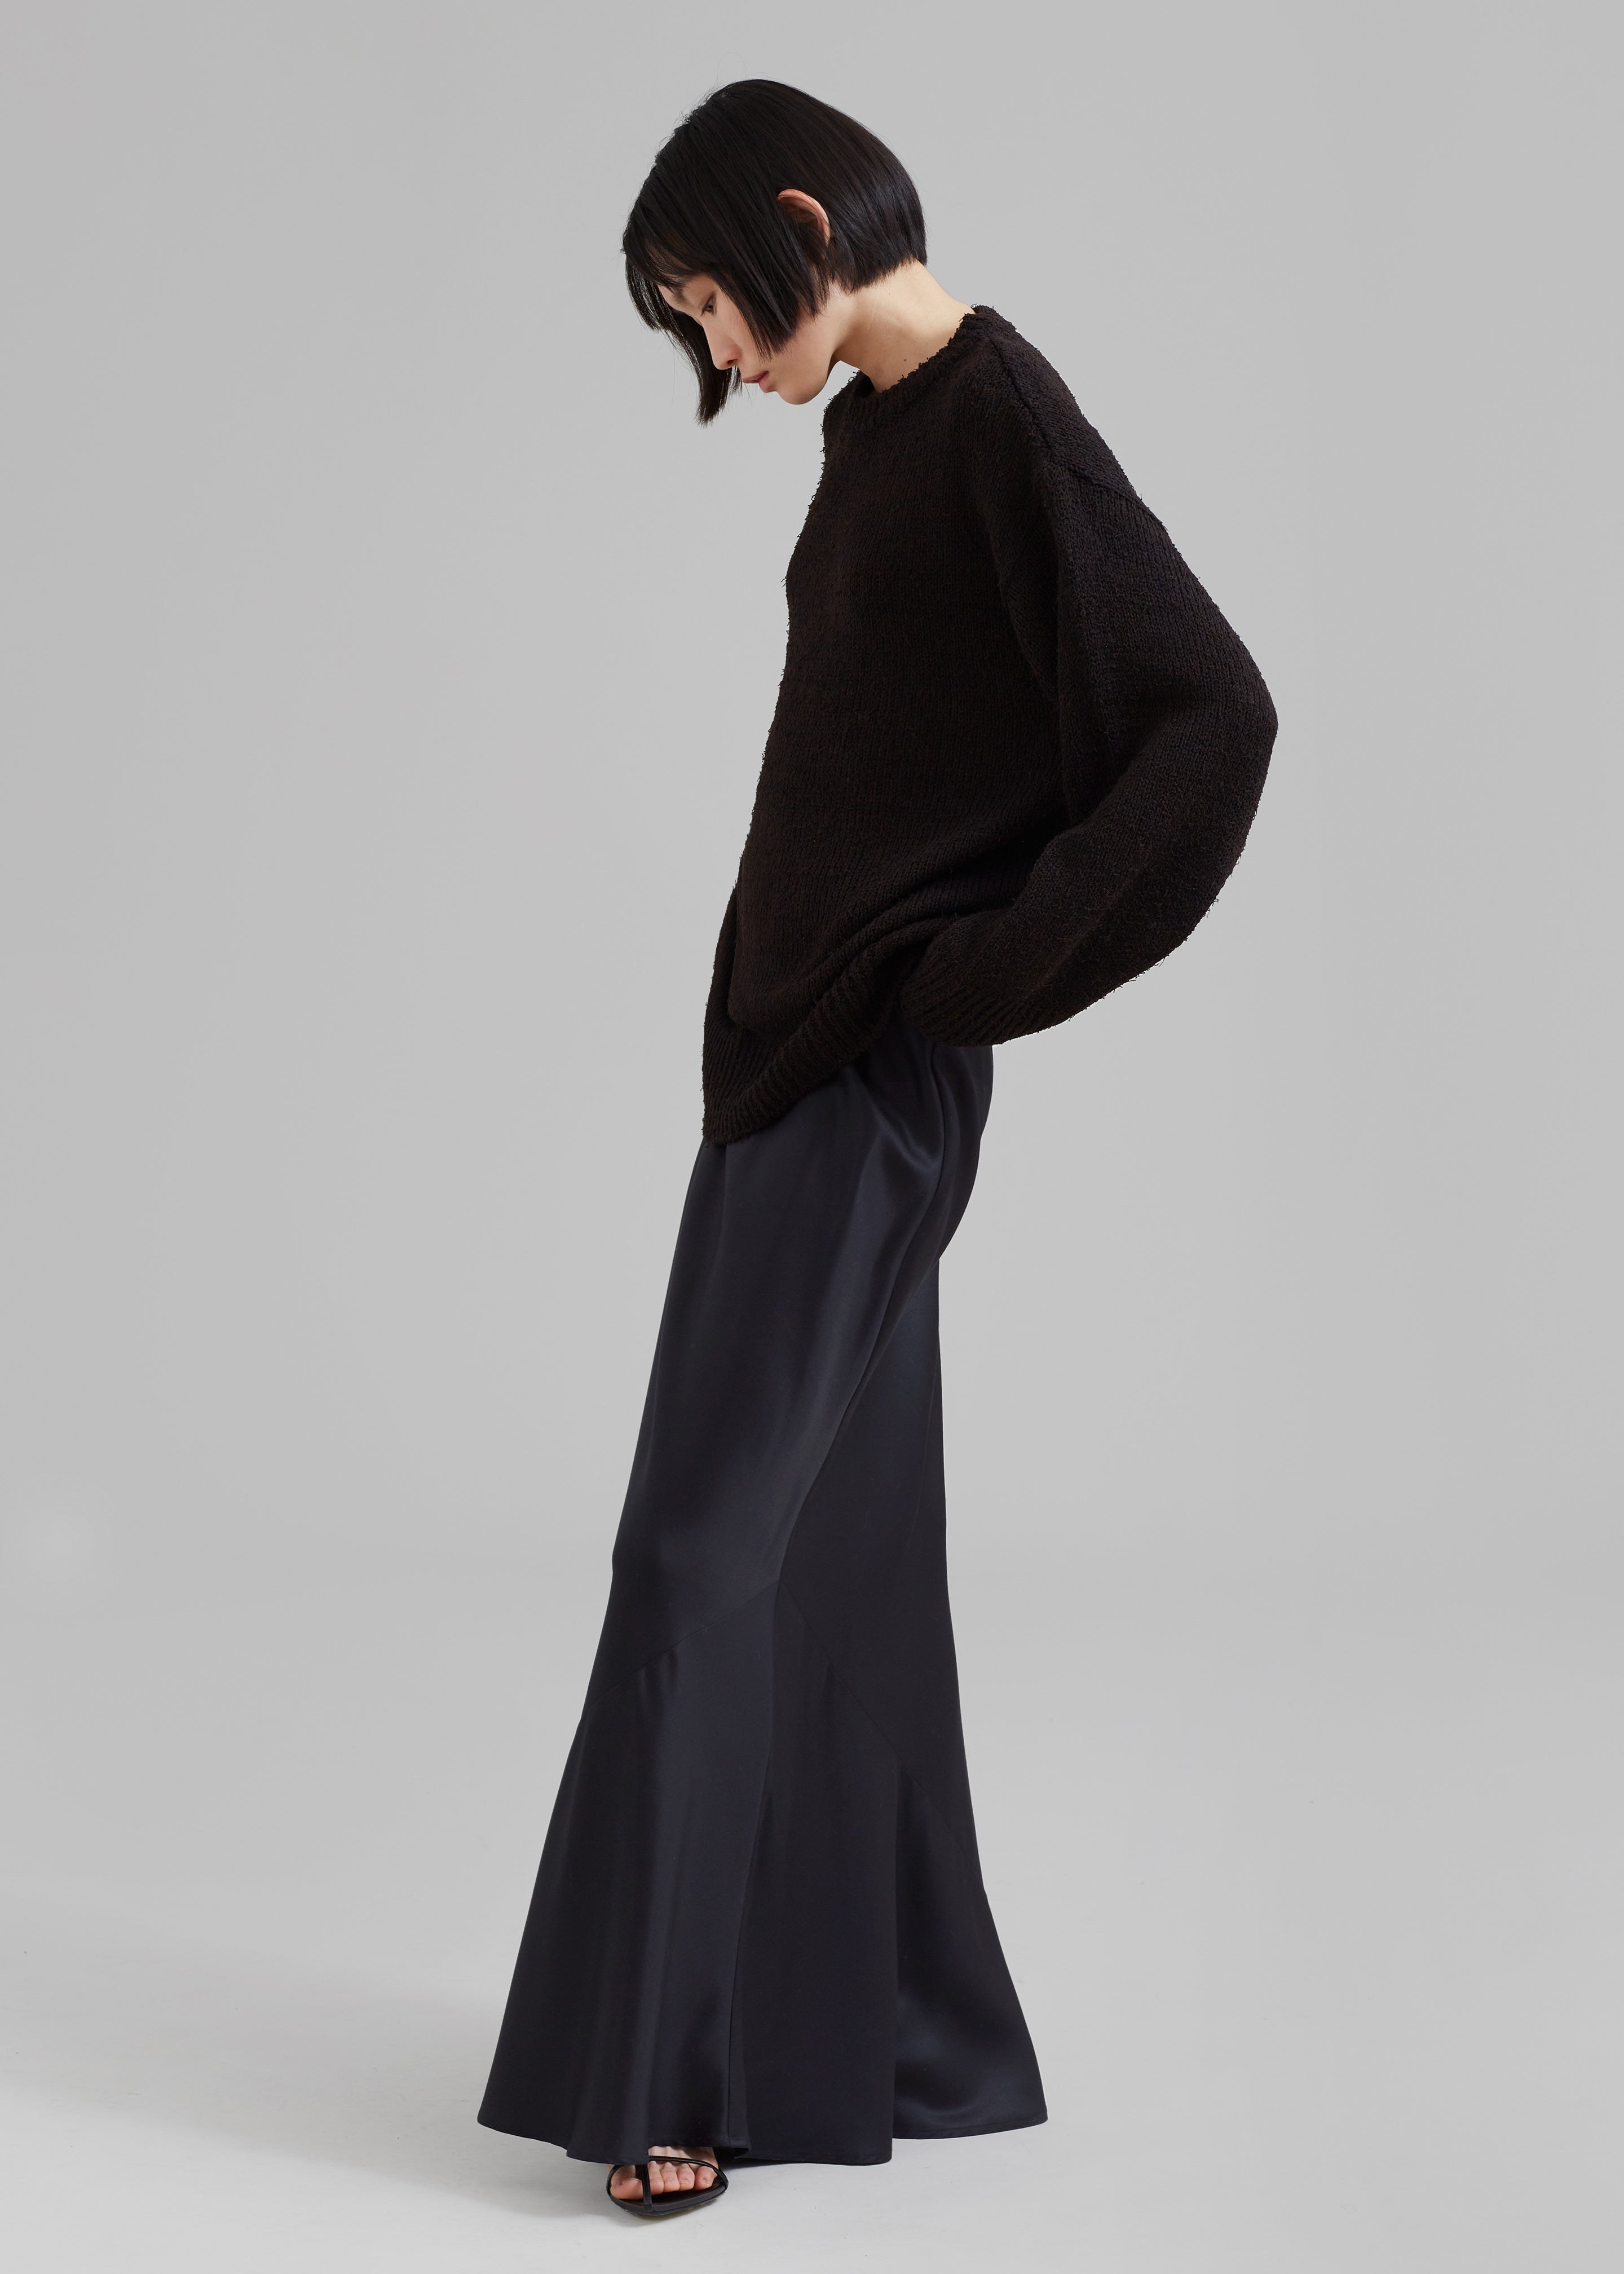 The Garment Bel Air Skirt - Black - 1